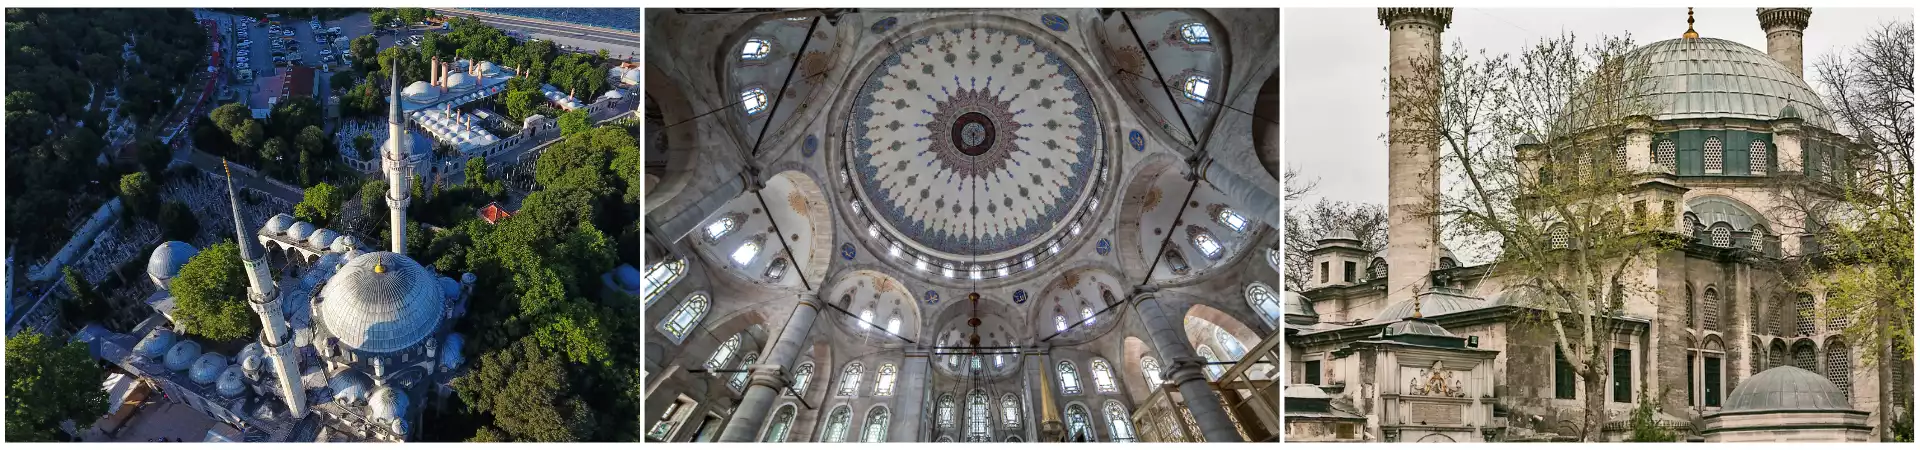 Tour de la Mezquita del Sultán Eyup